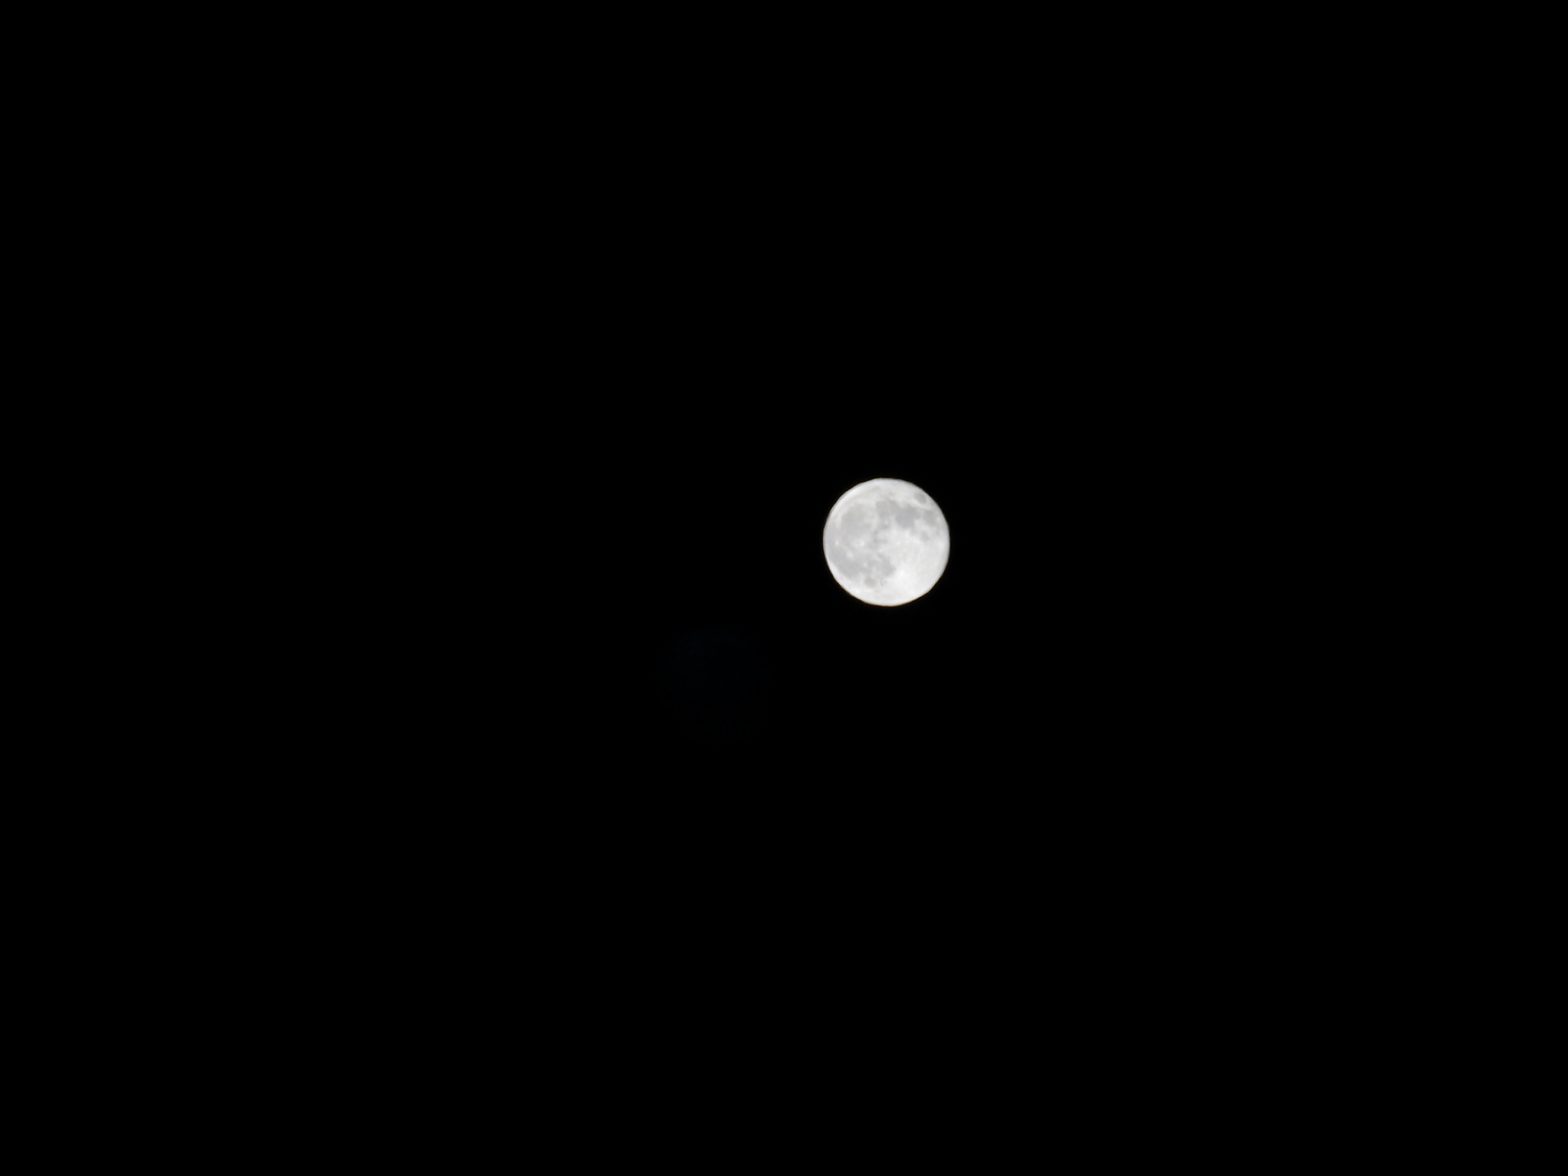 Photos of the moon